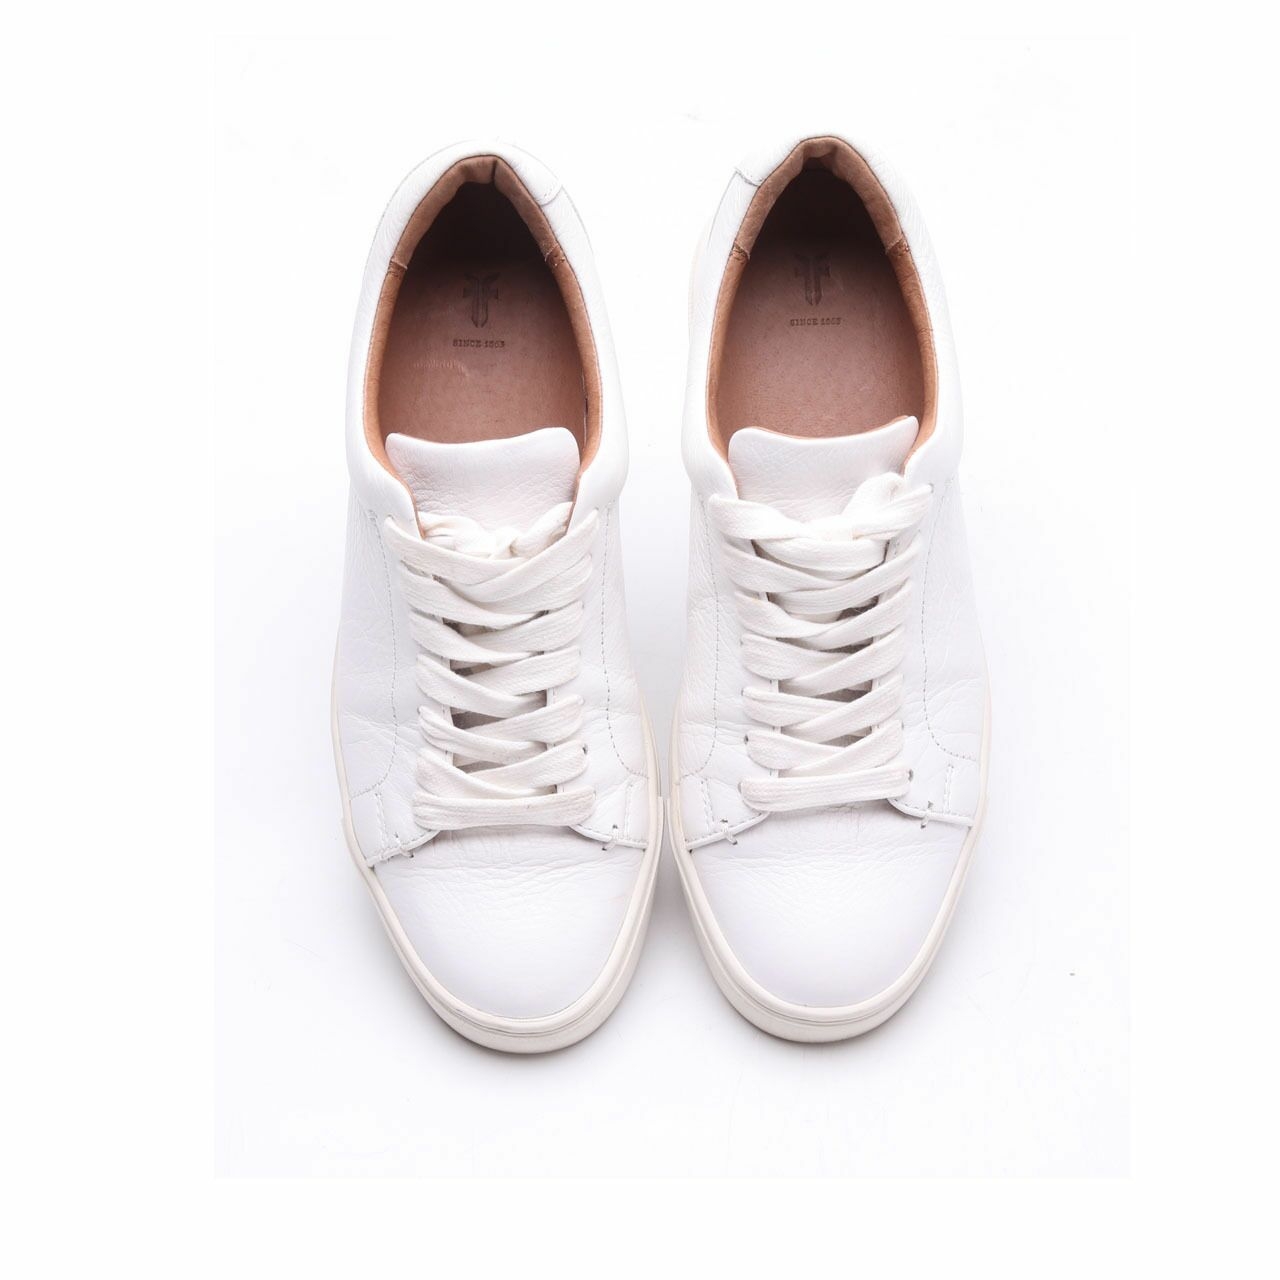 FRYE White Sneakers